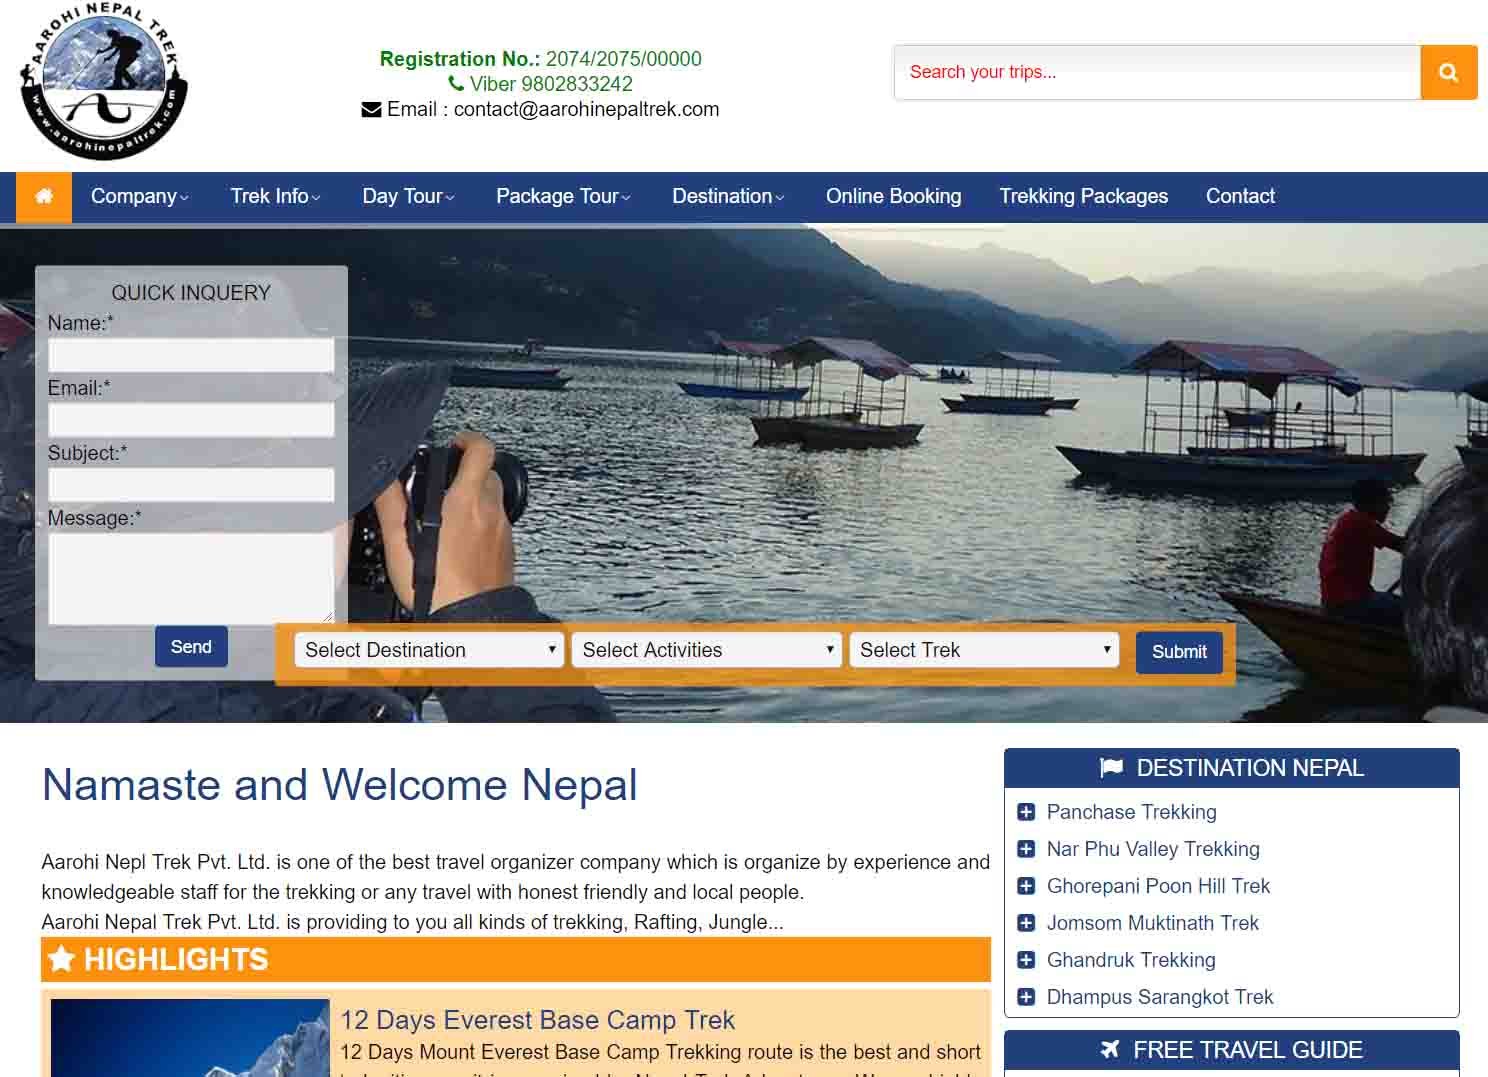 Aarohi Nepal Trek PVT LTD